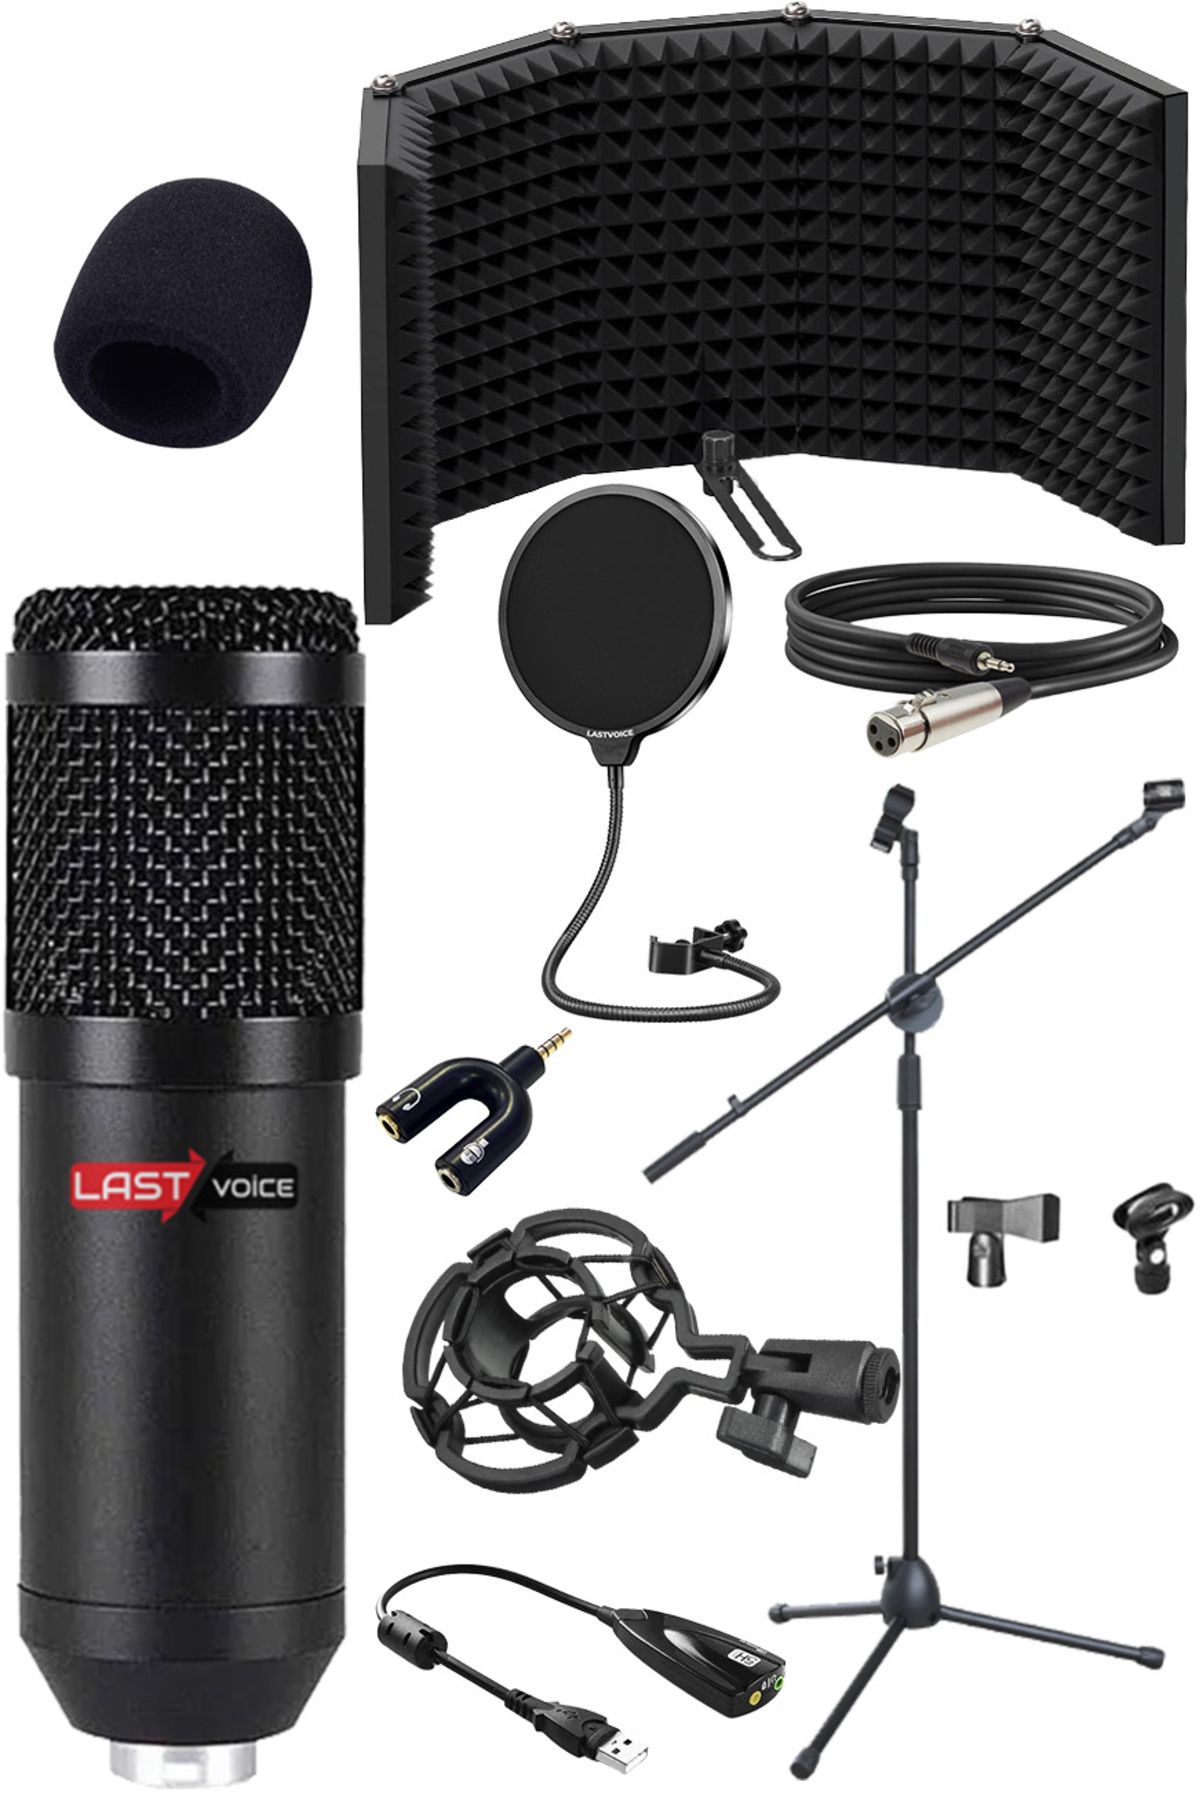 Lastvoice Bm800pf Mikrofon Yalıtım Paneli Stand Filtre Shock Mount set